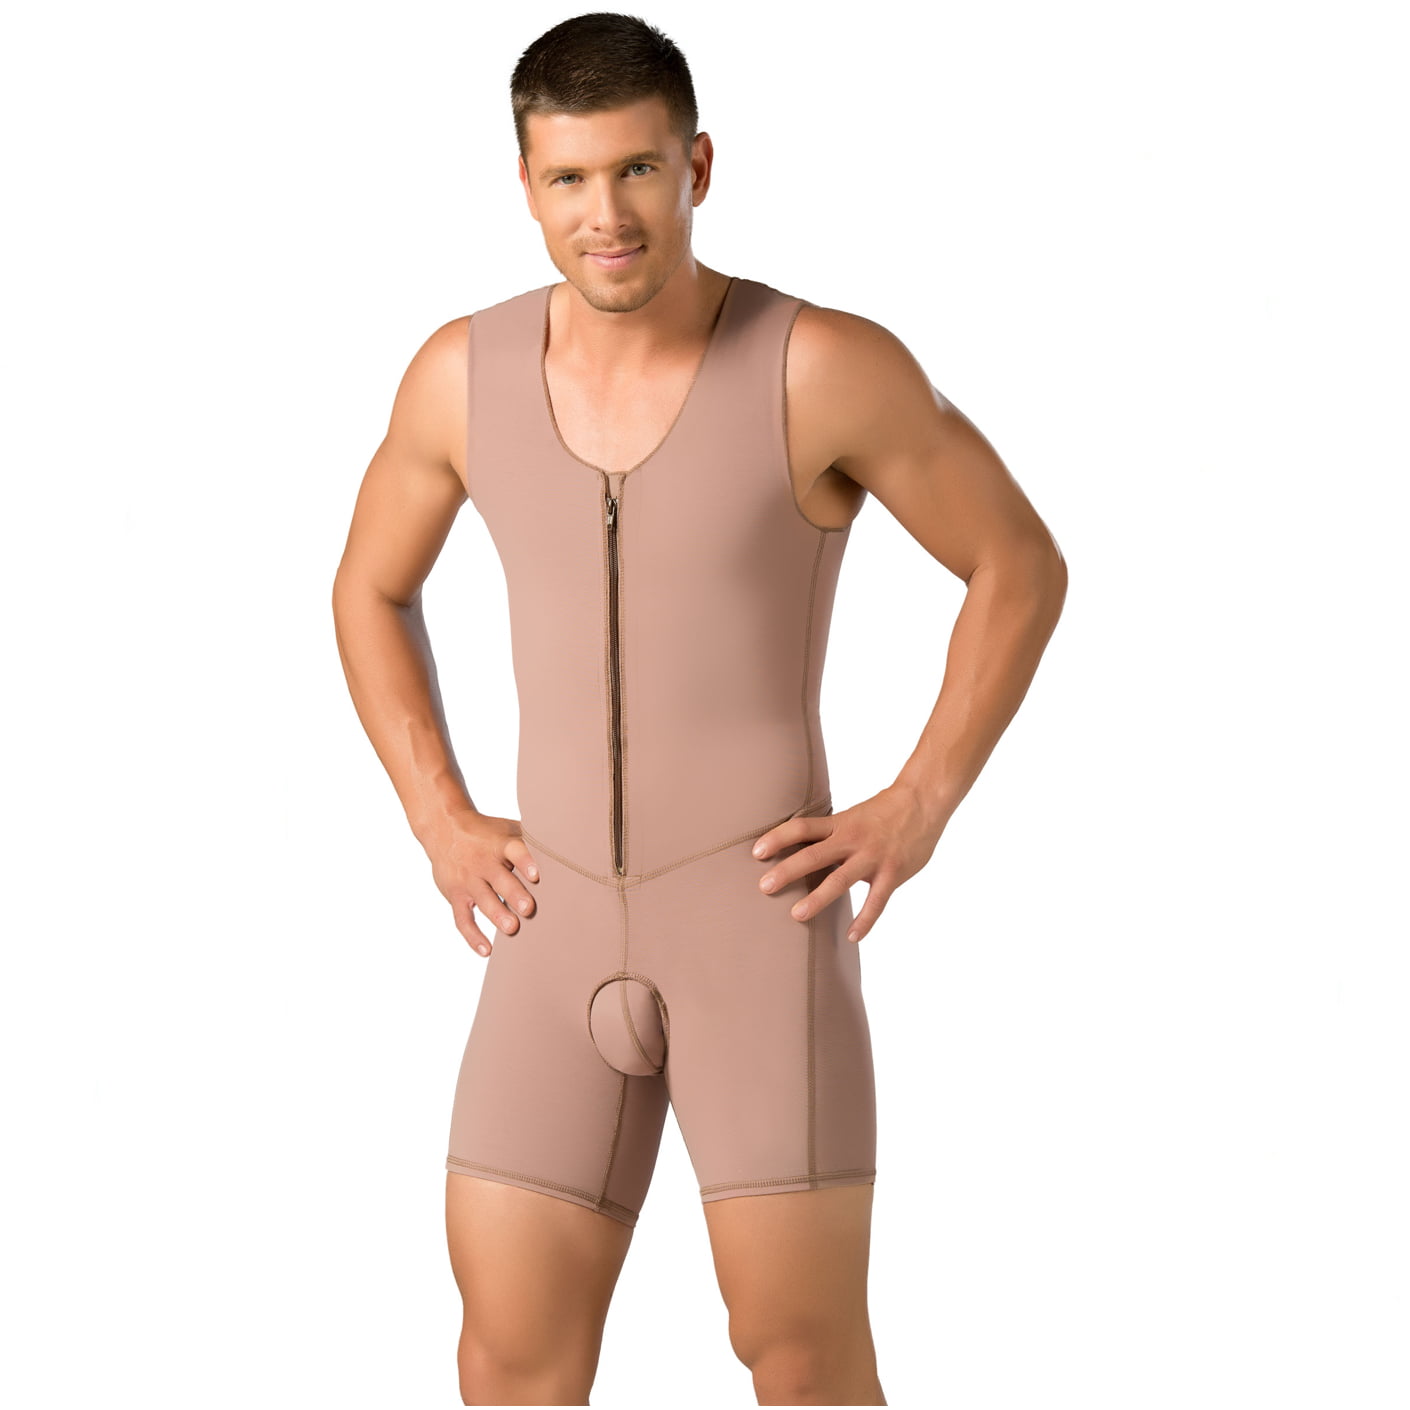 Geordi 2007 man,faja colombiana,corrector postura,men shapewear abdomen control 